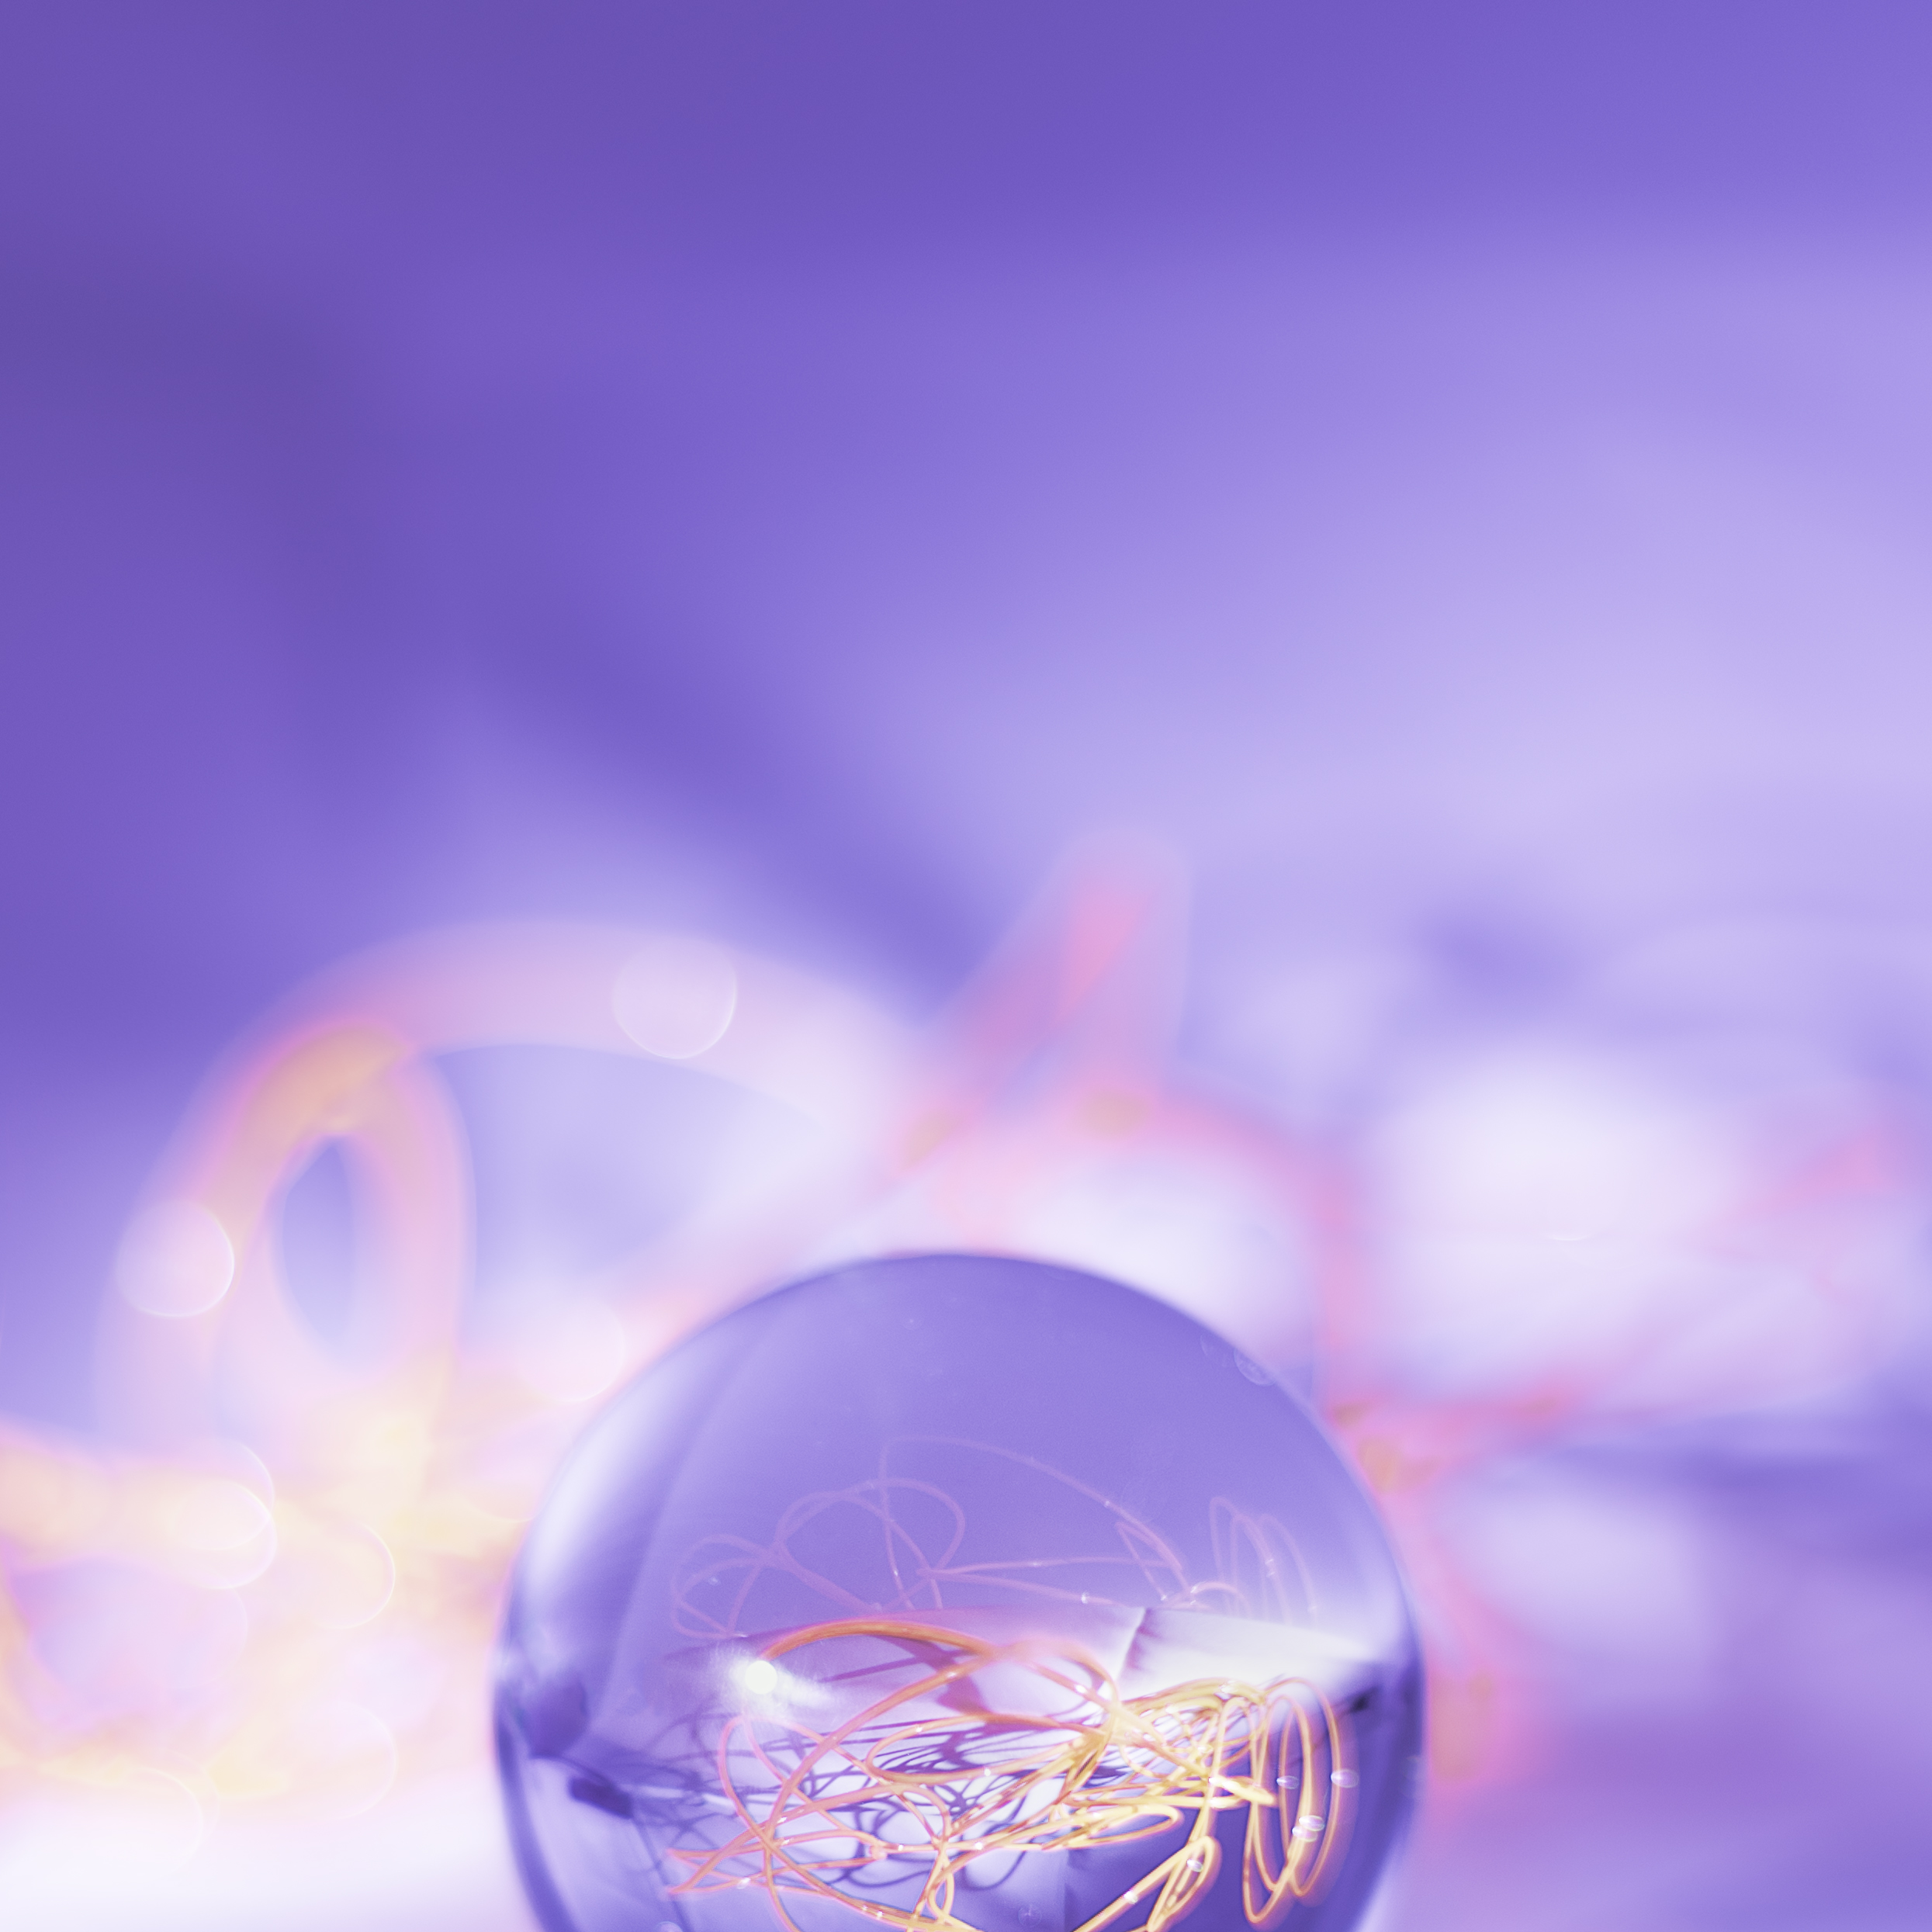 ball, crystal, purple, violet, reflection, macro